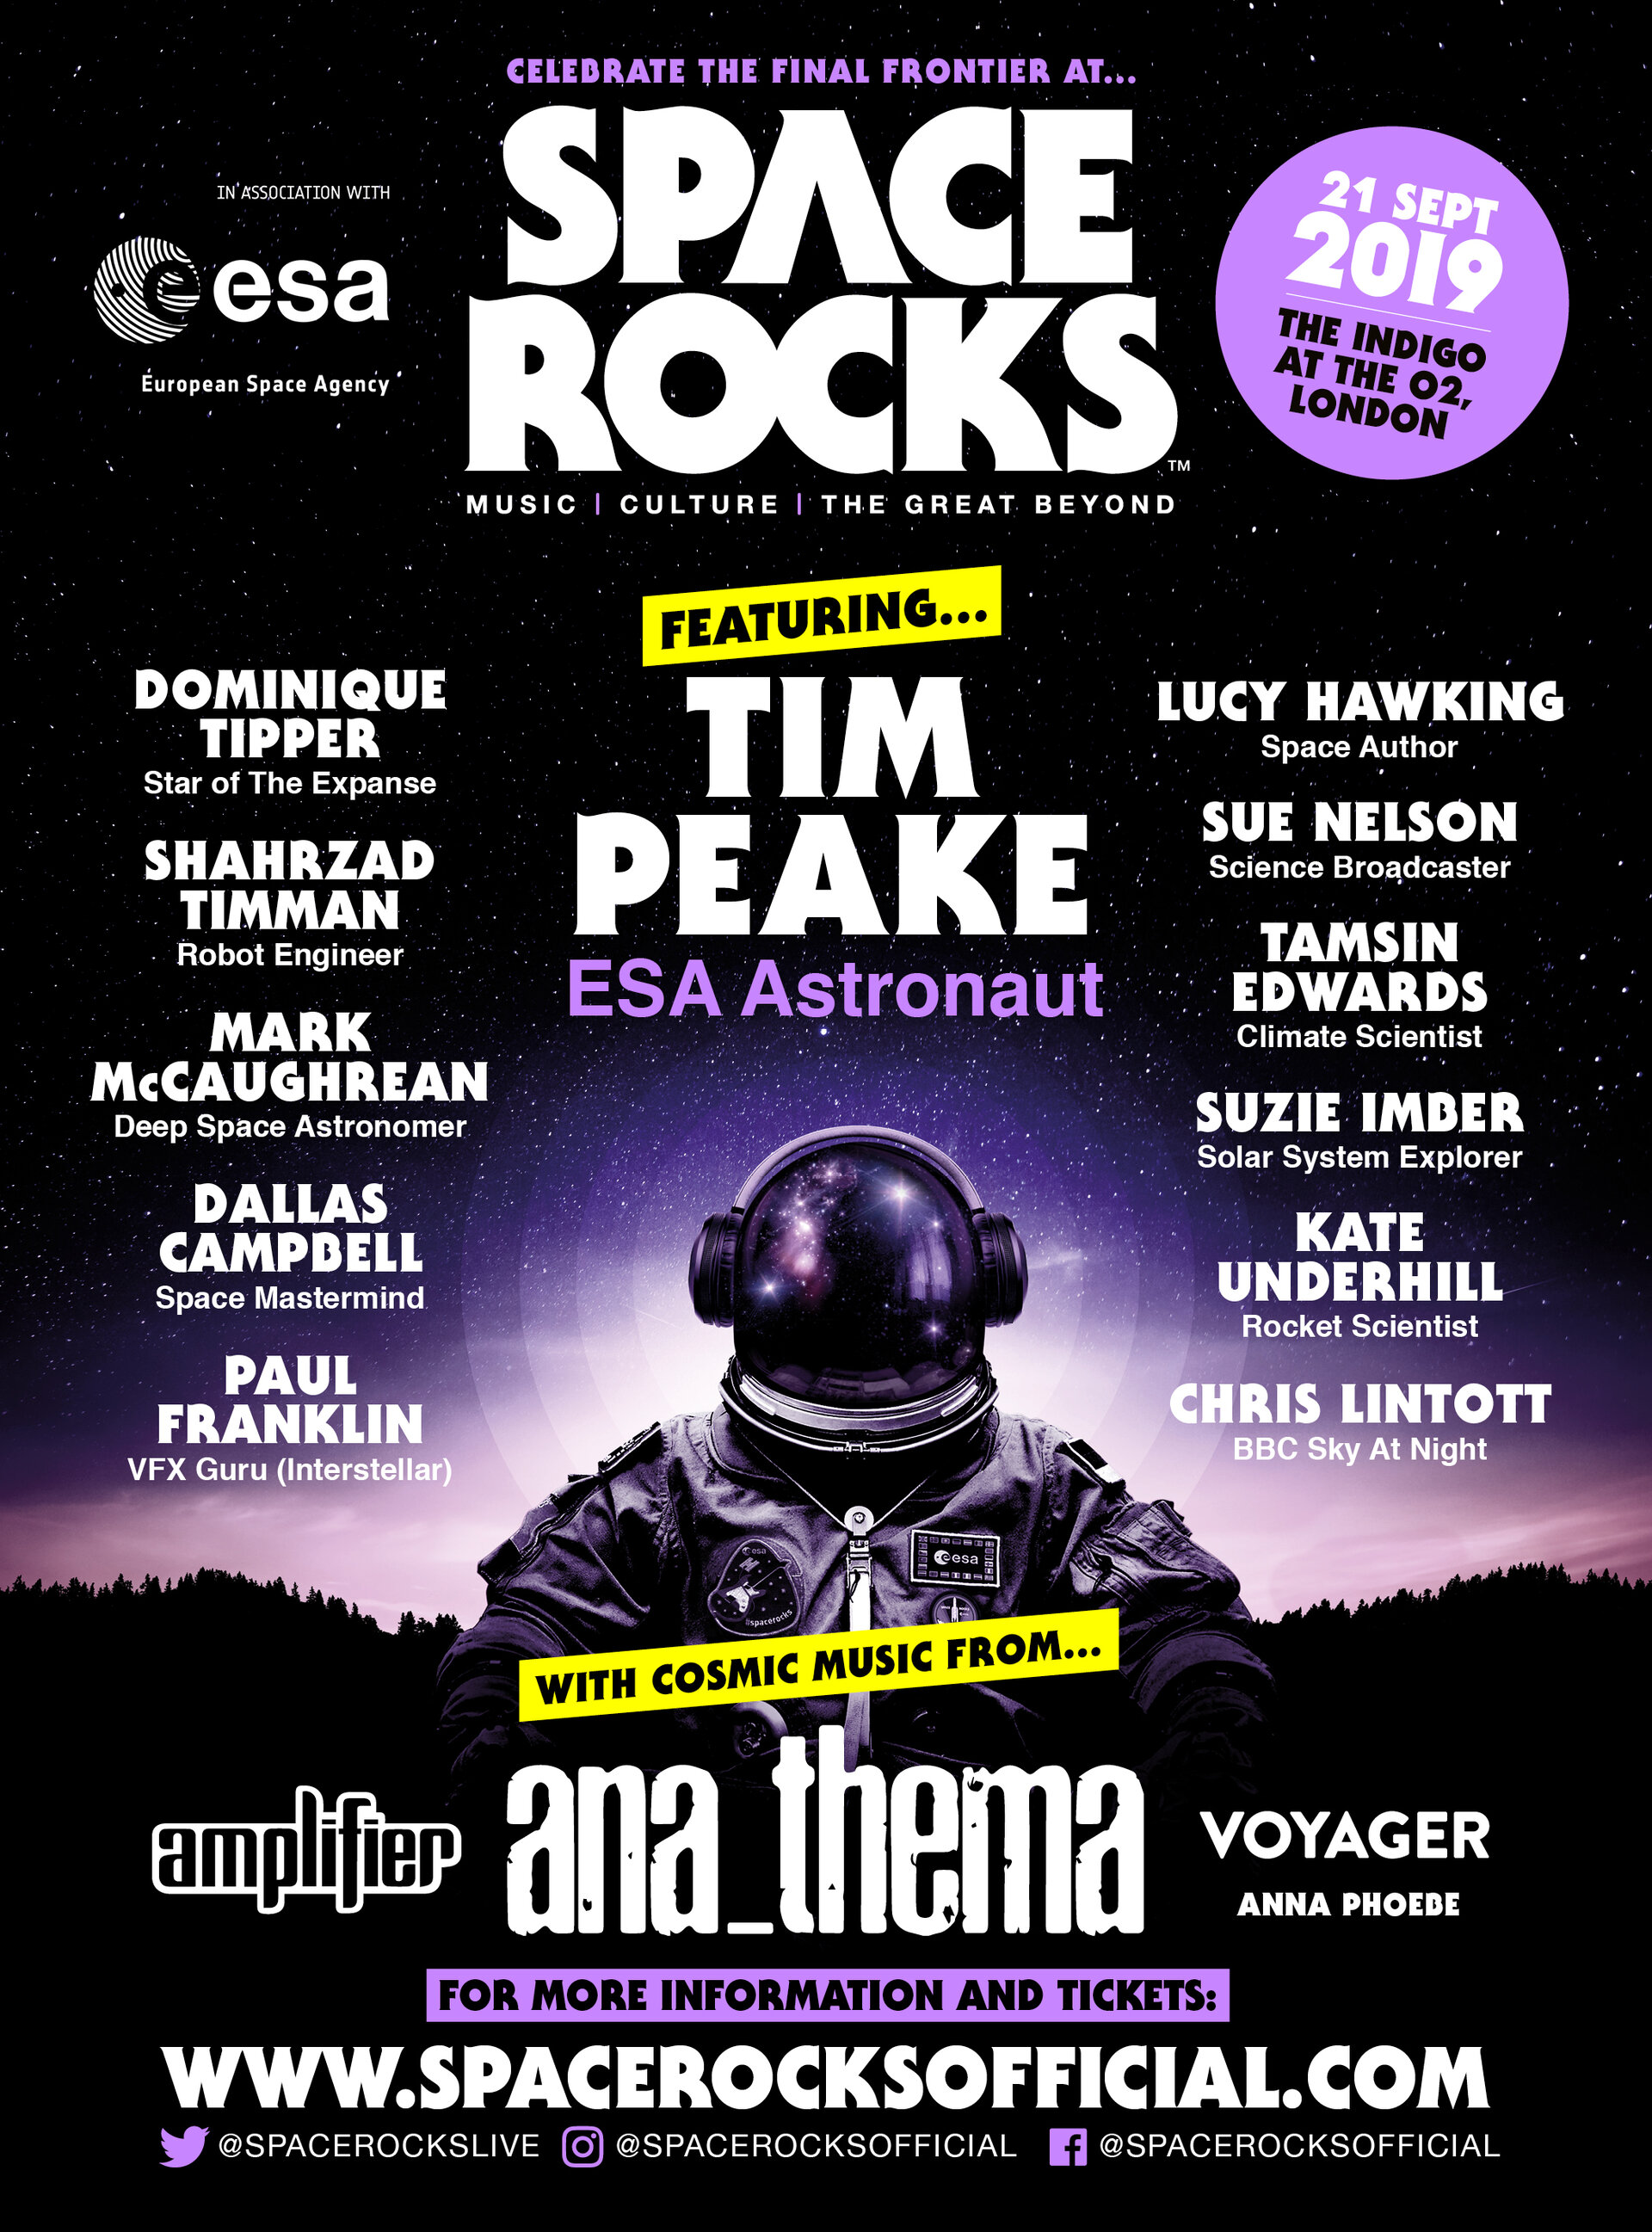 Space Rocks 2 poster art 